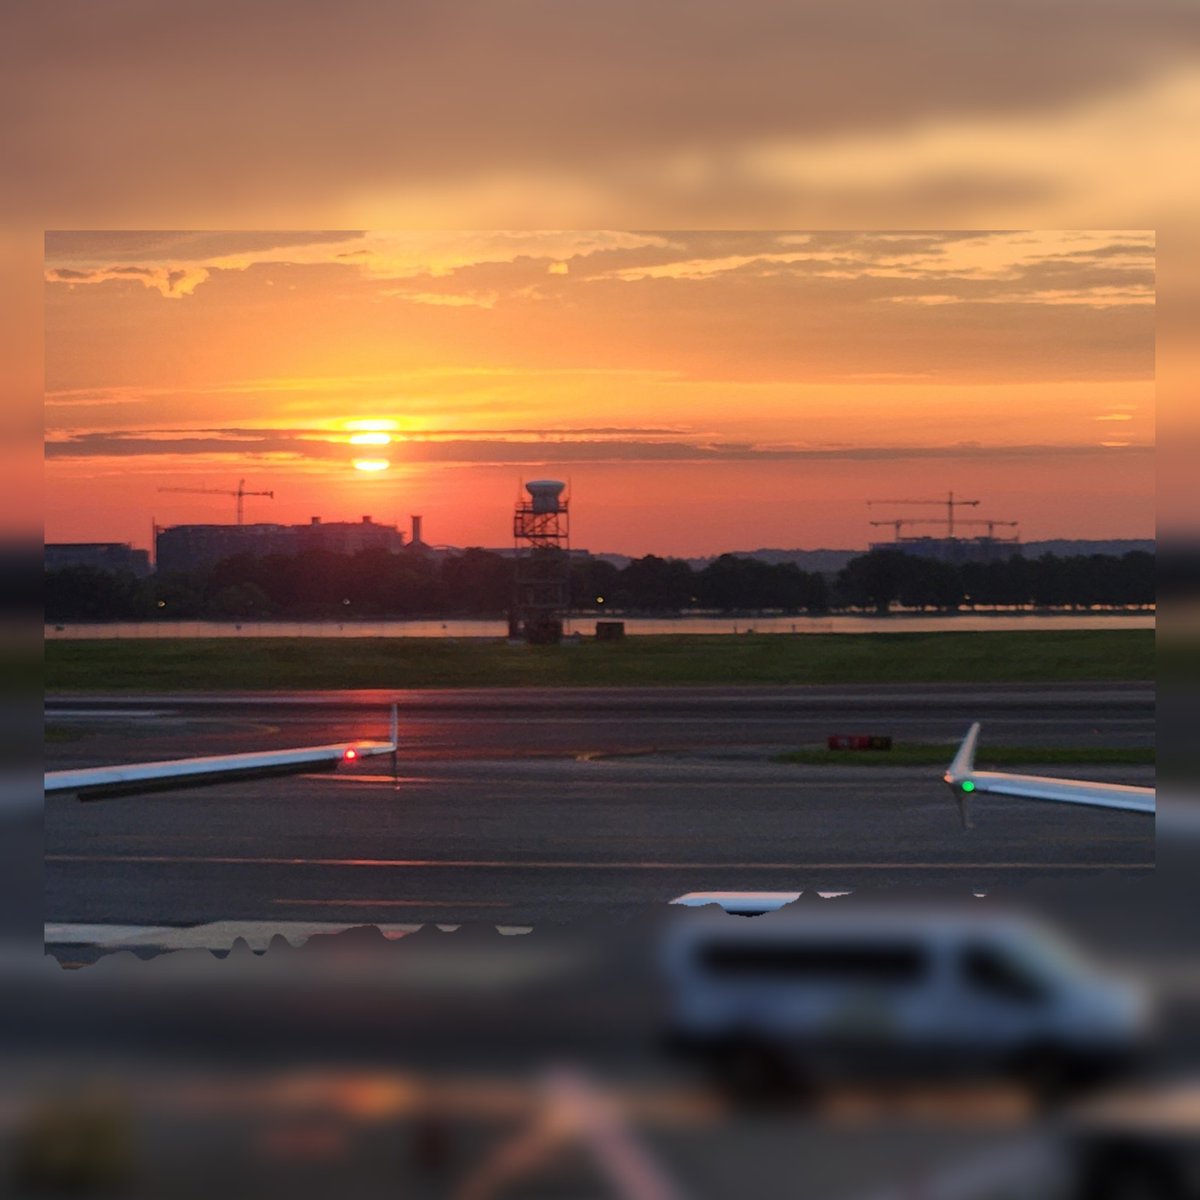 GM the beautiful sunrise from @Reagan_Airport @TuckerFox5 @Conthescene @MikeTFox5 @MatthewCappucci @TaylorGrenda @gwenfox5dc @caitlinrothfox5 @JenDelgadoFOX @accuweather @weatherchannel @capitalweather